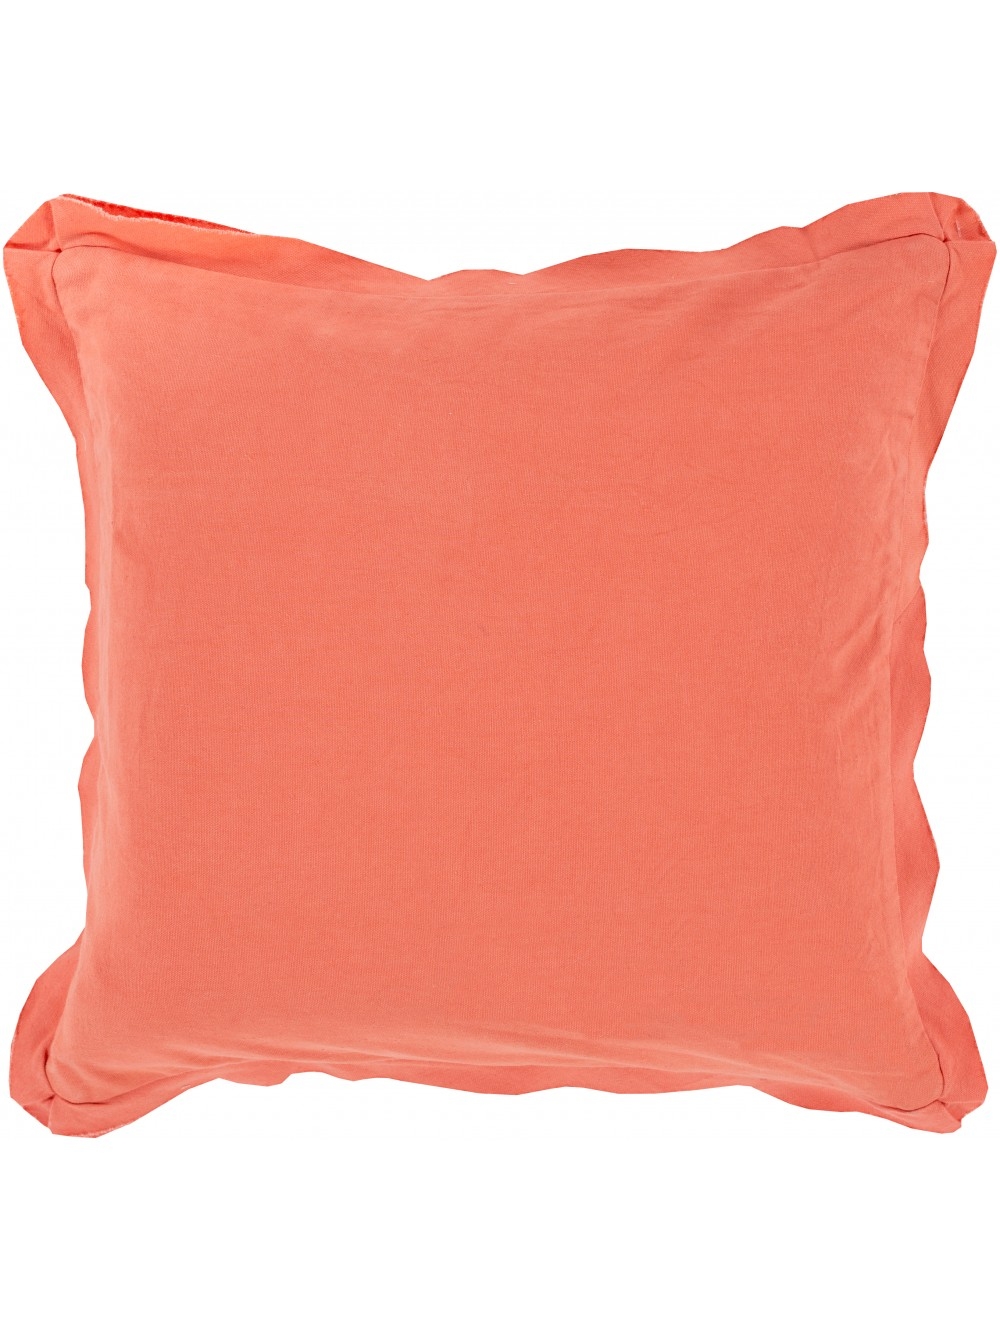 Sasha Ruffle Pillow, Coral -18" x 18" - Polyester Filled - Image 0